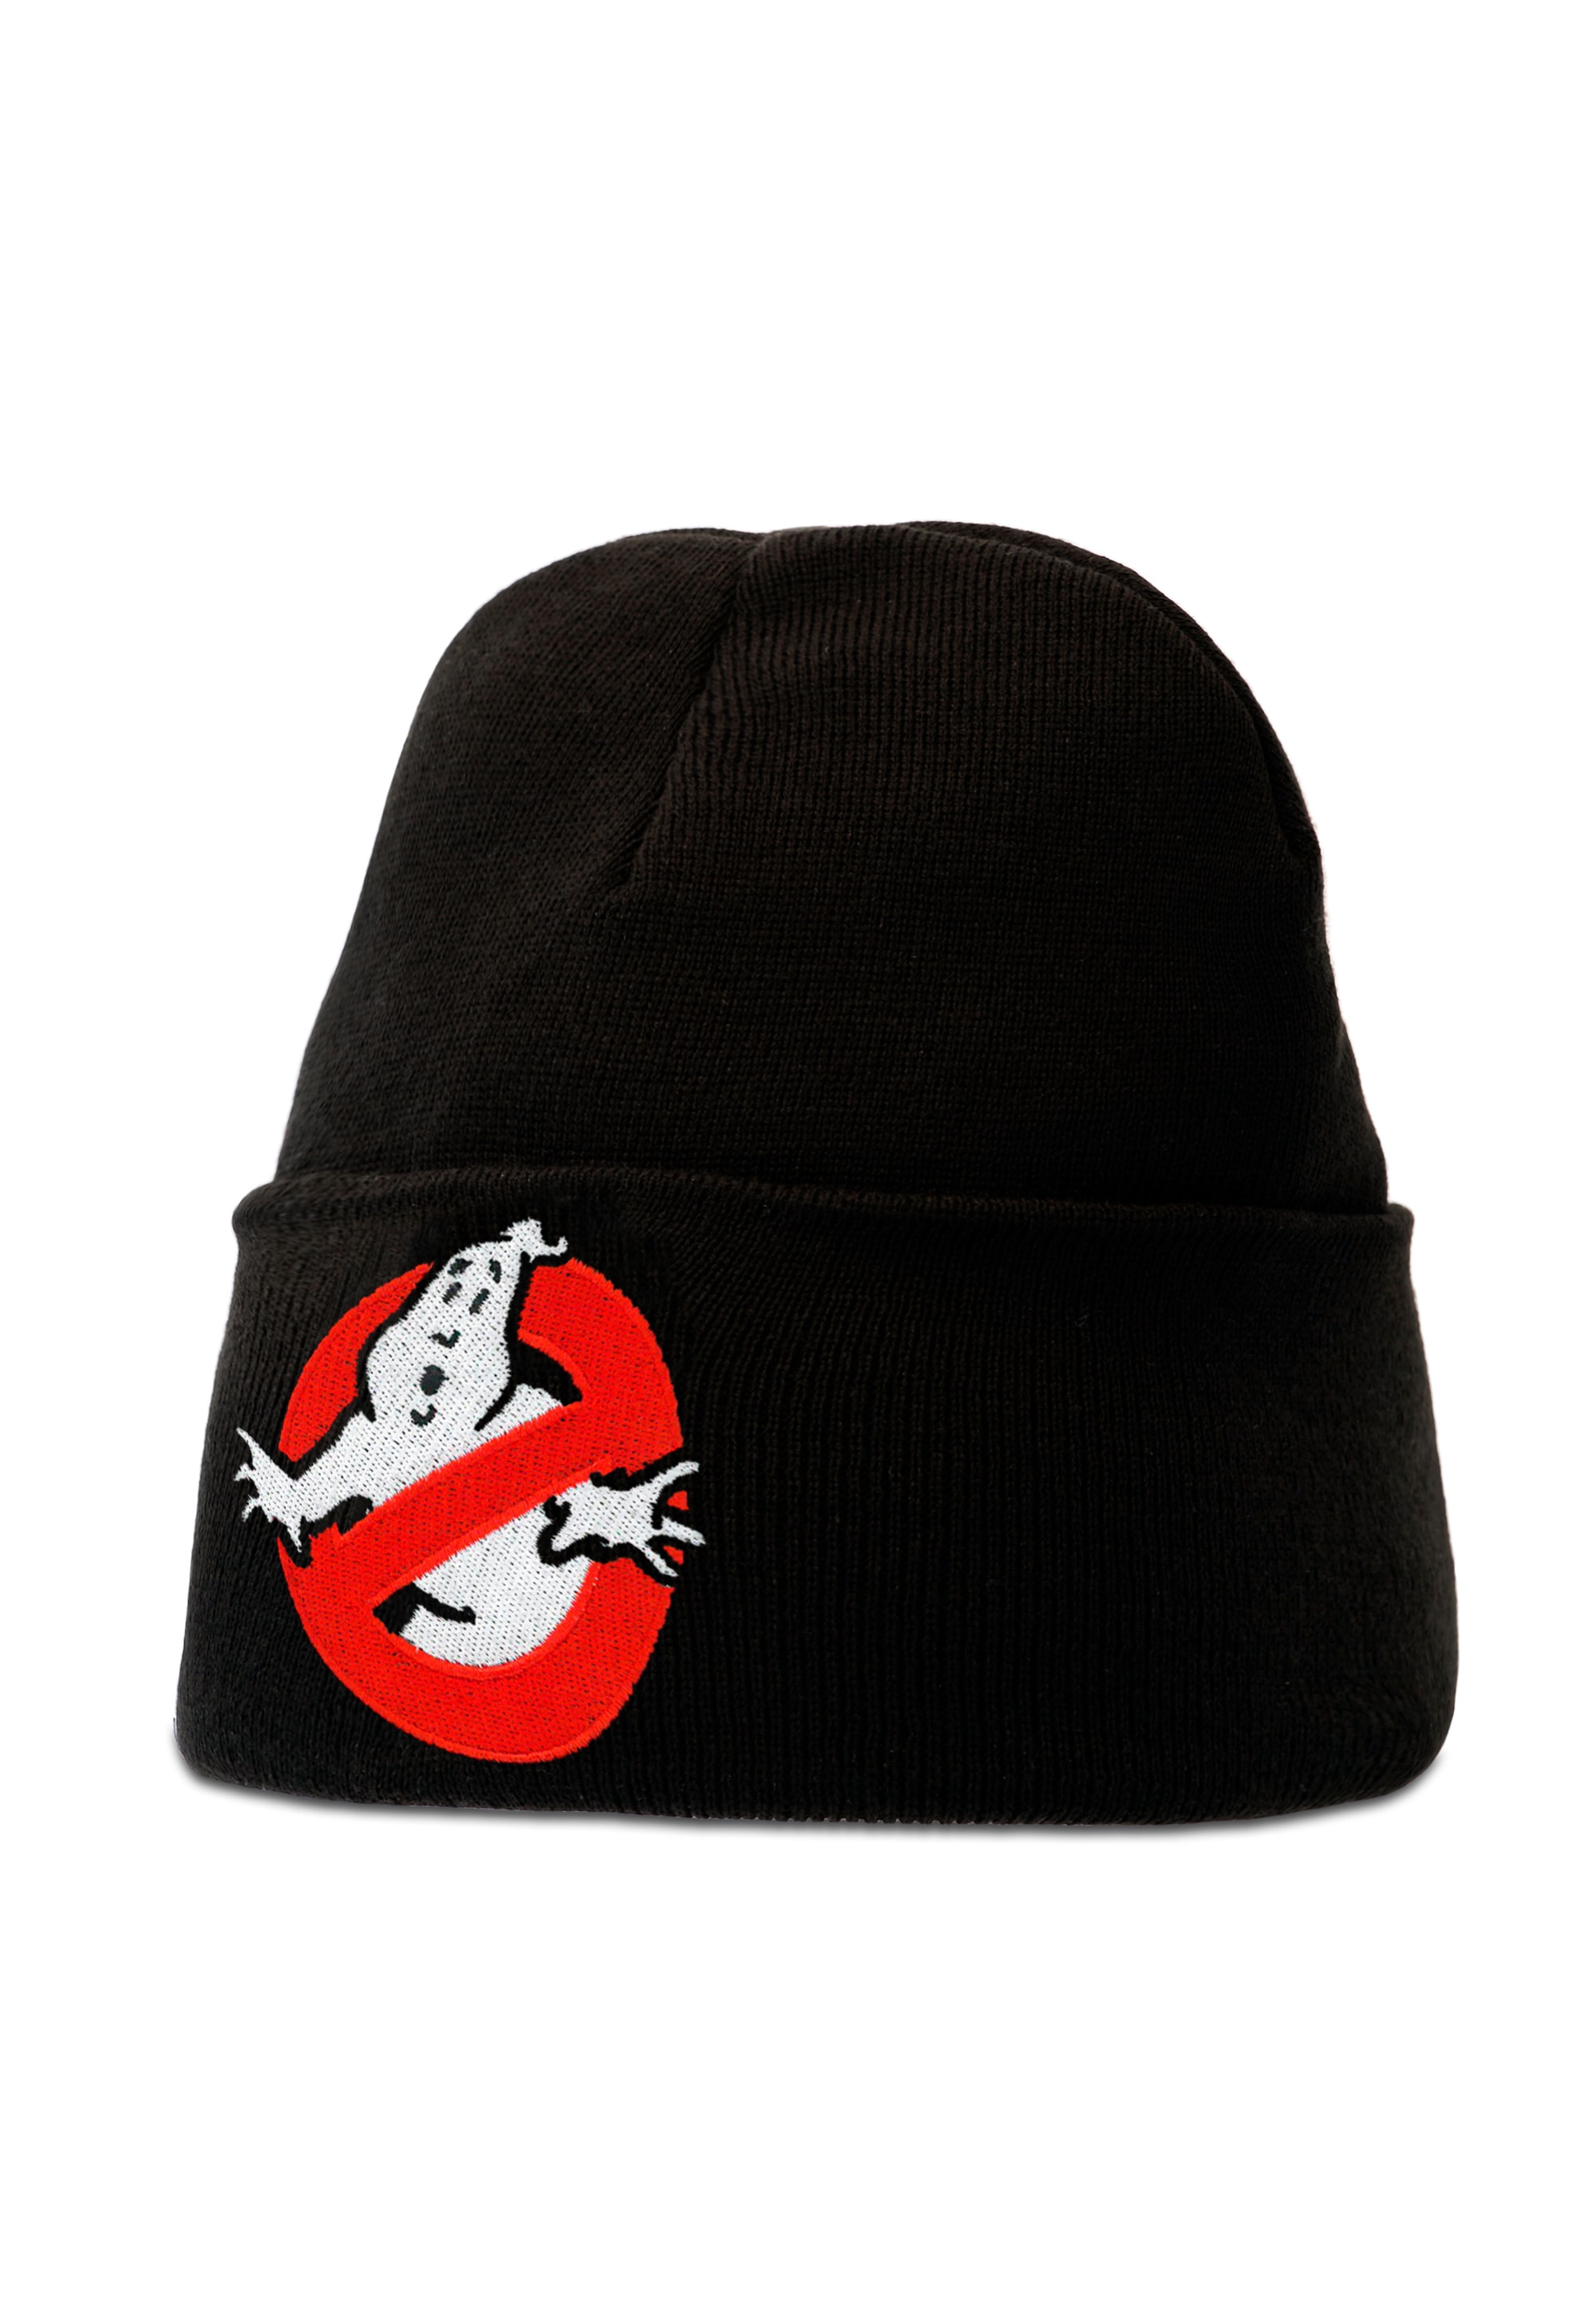 LOGOSHIRT Strickmütze Ghostbusters mit lizenziertem Design | Baseball Caps